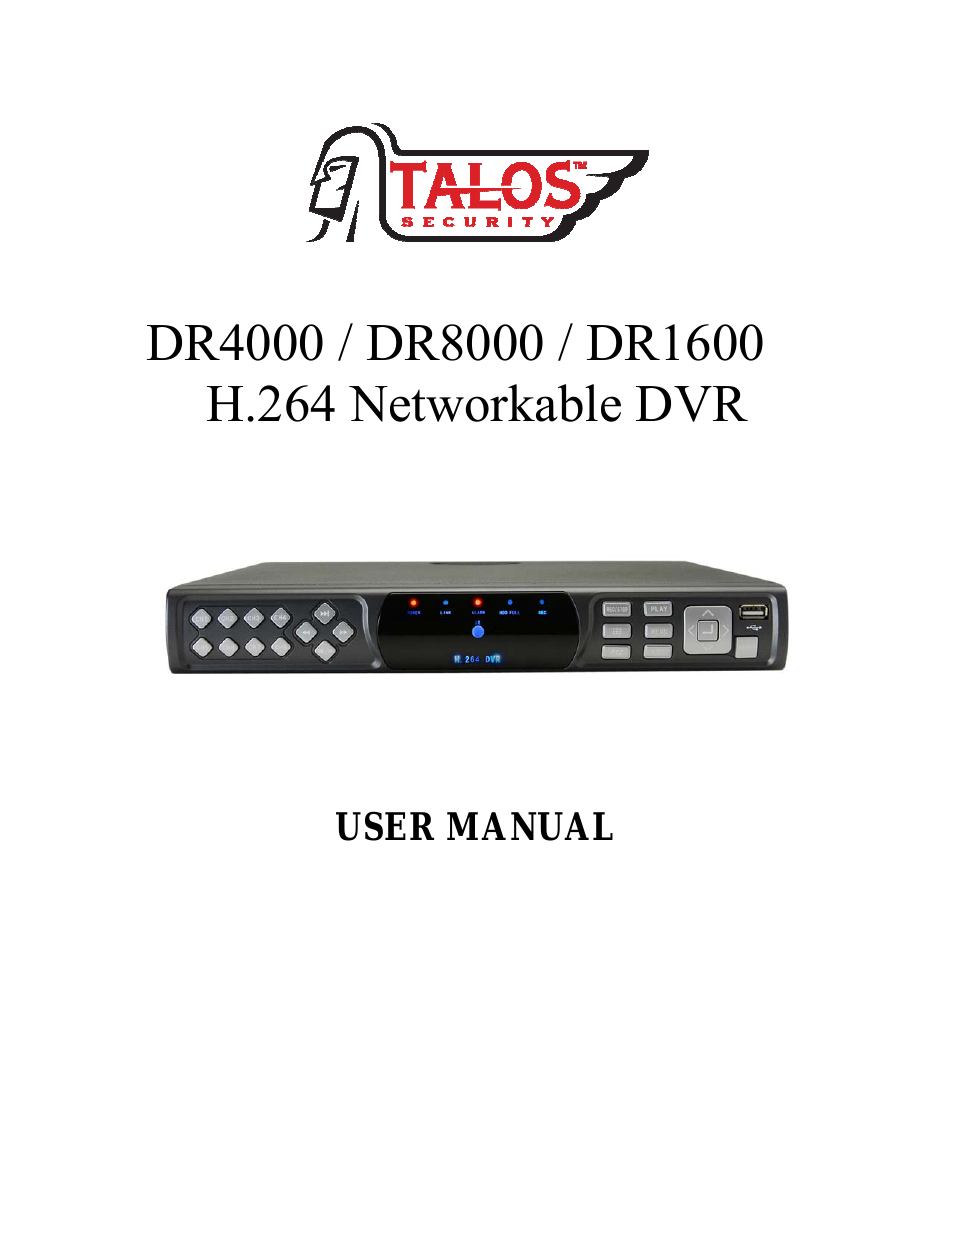 DR4000 Series DVR User Manual